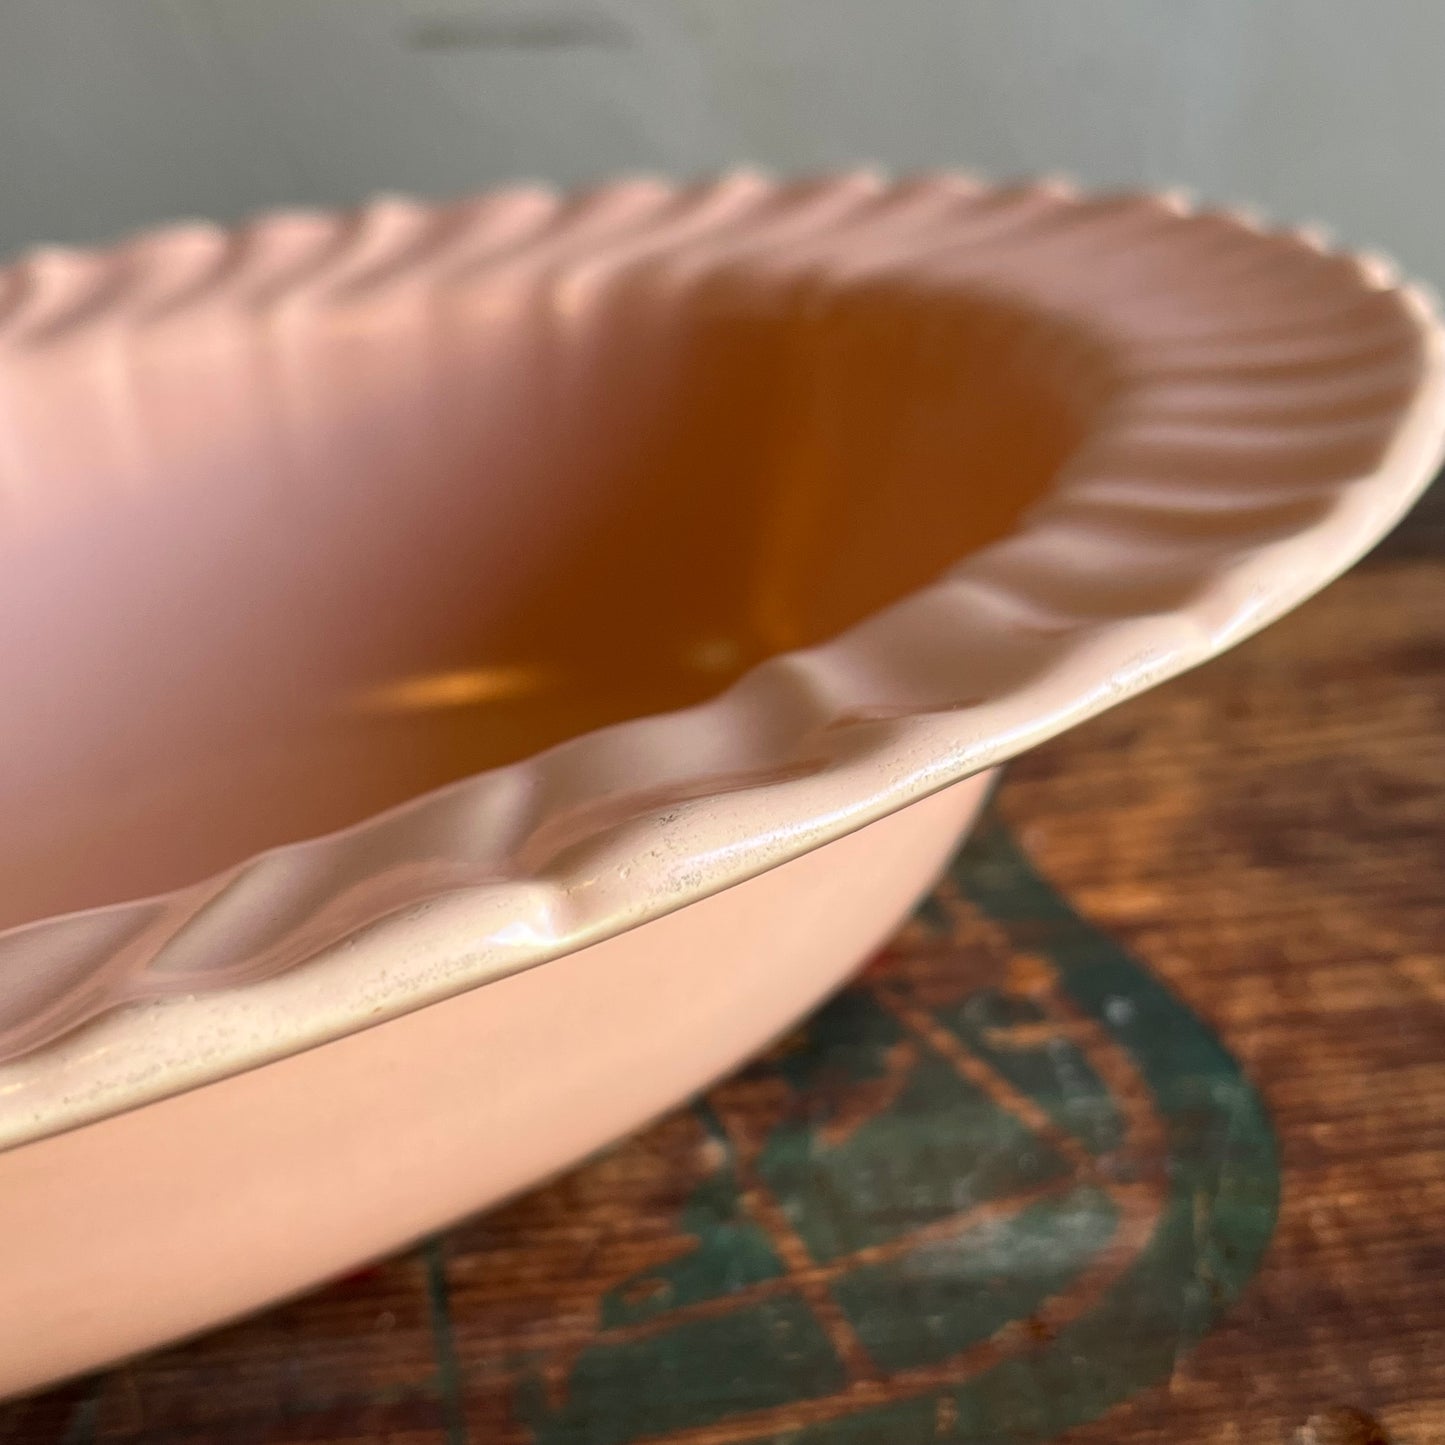 【50s USA vintage】Gladding McBean Serving bowl